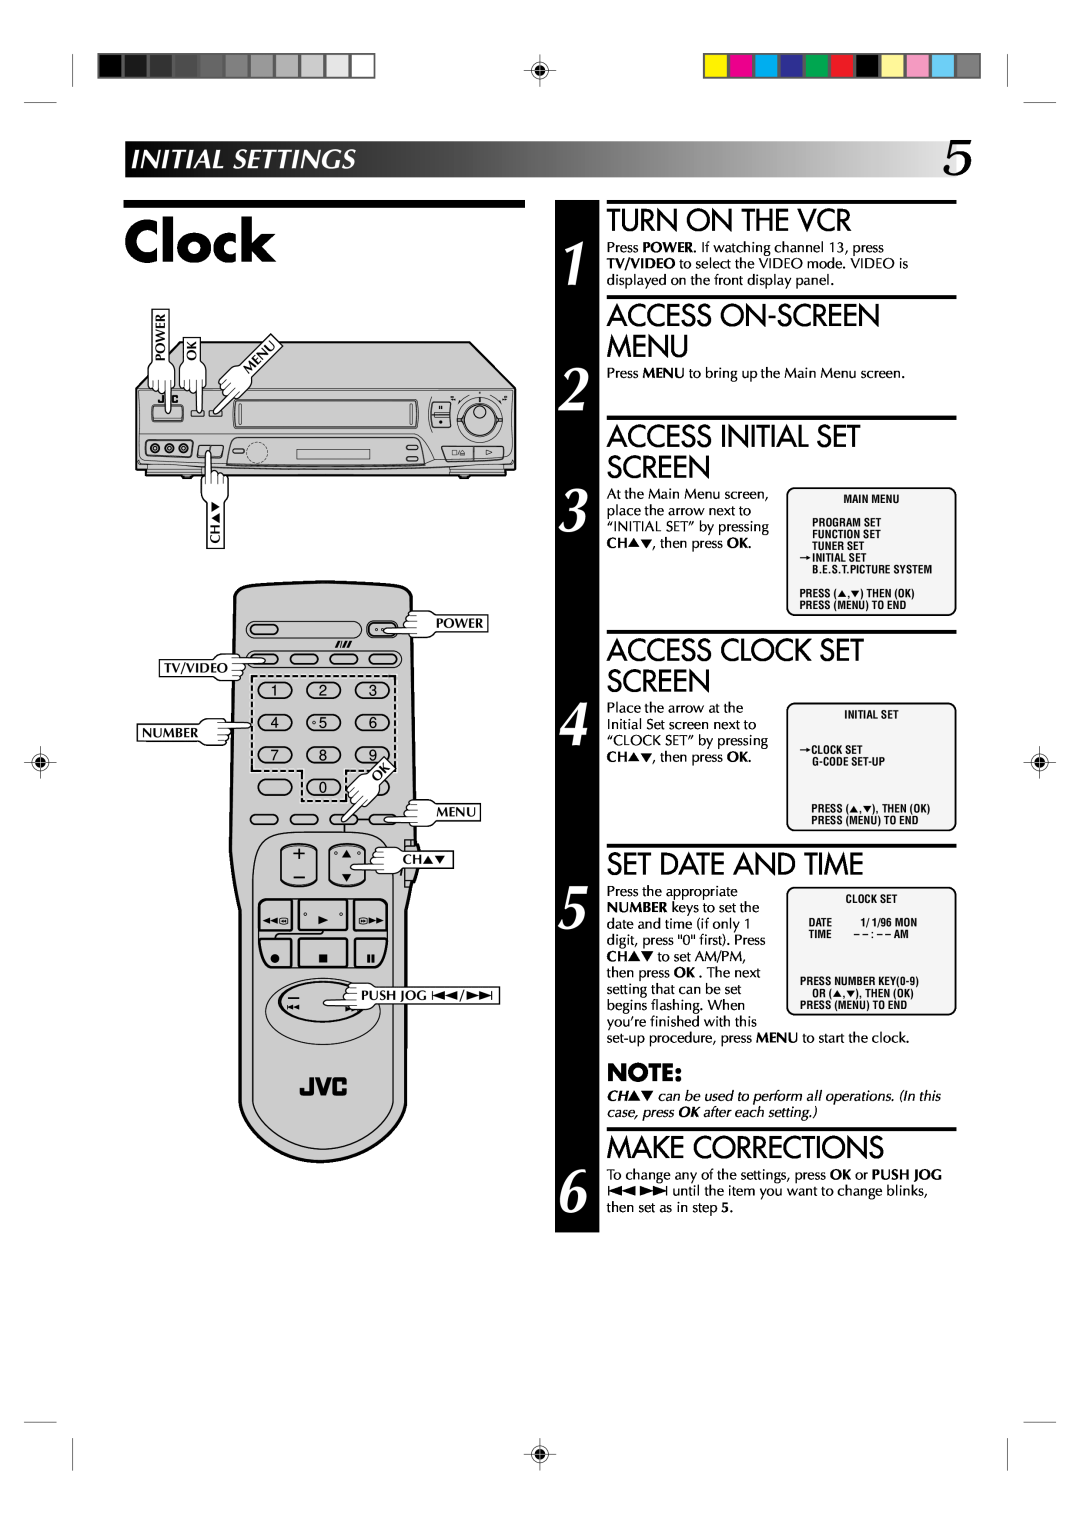 JVC HR-J631T manual Turn On The Vcr, Access On-Screen Menu, Access Initial Set Screen, Access Clock Set Screen, Power 